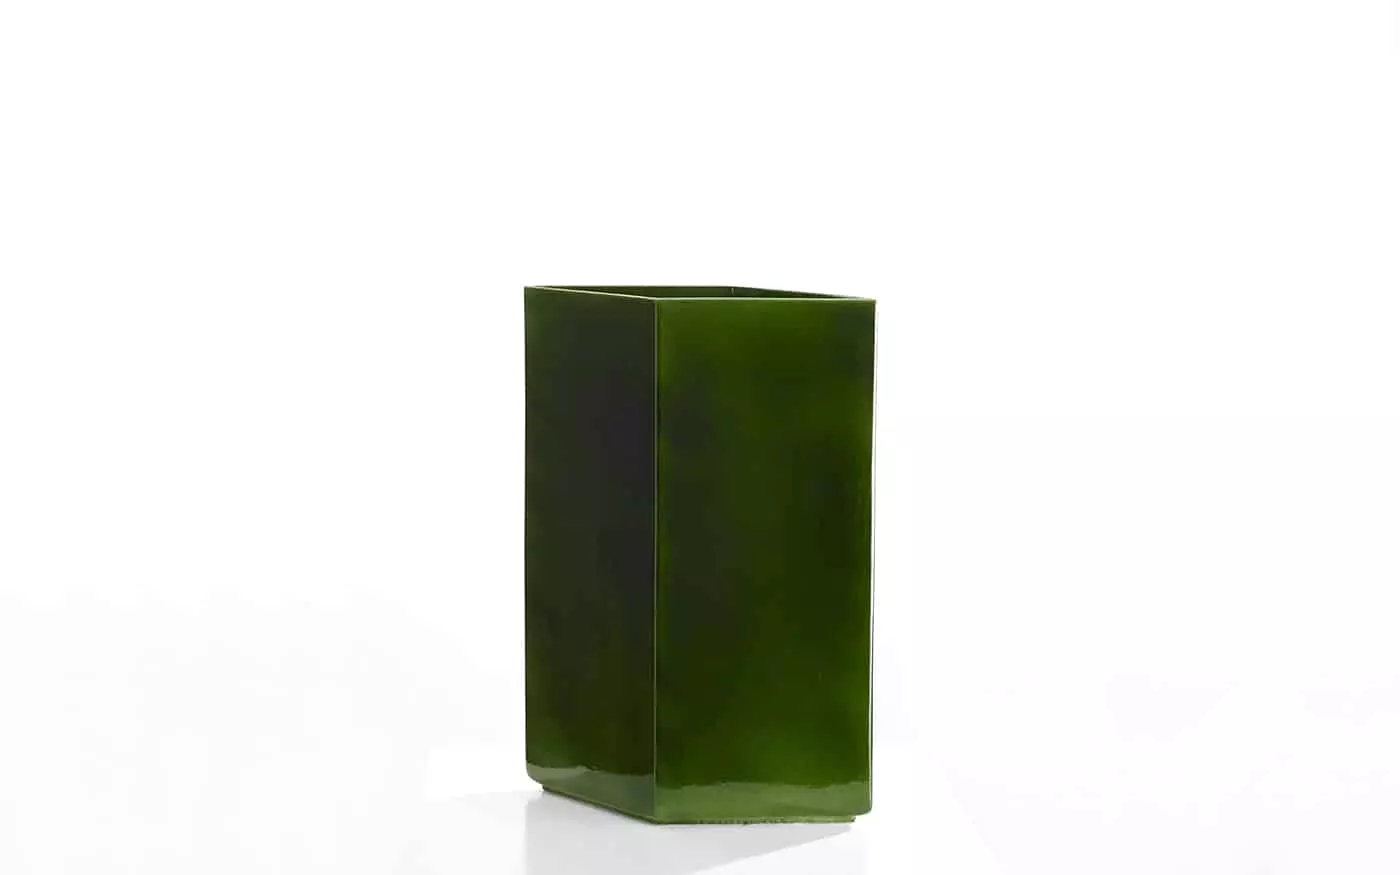 Vase Losange 67 green - Ronan & Erwan Bouroullec - Art and Drawing - Galerie kreo